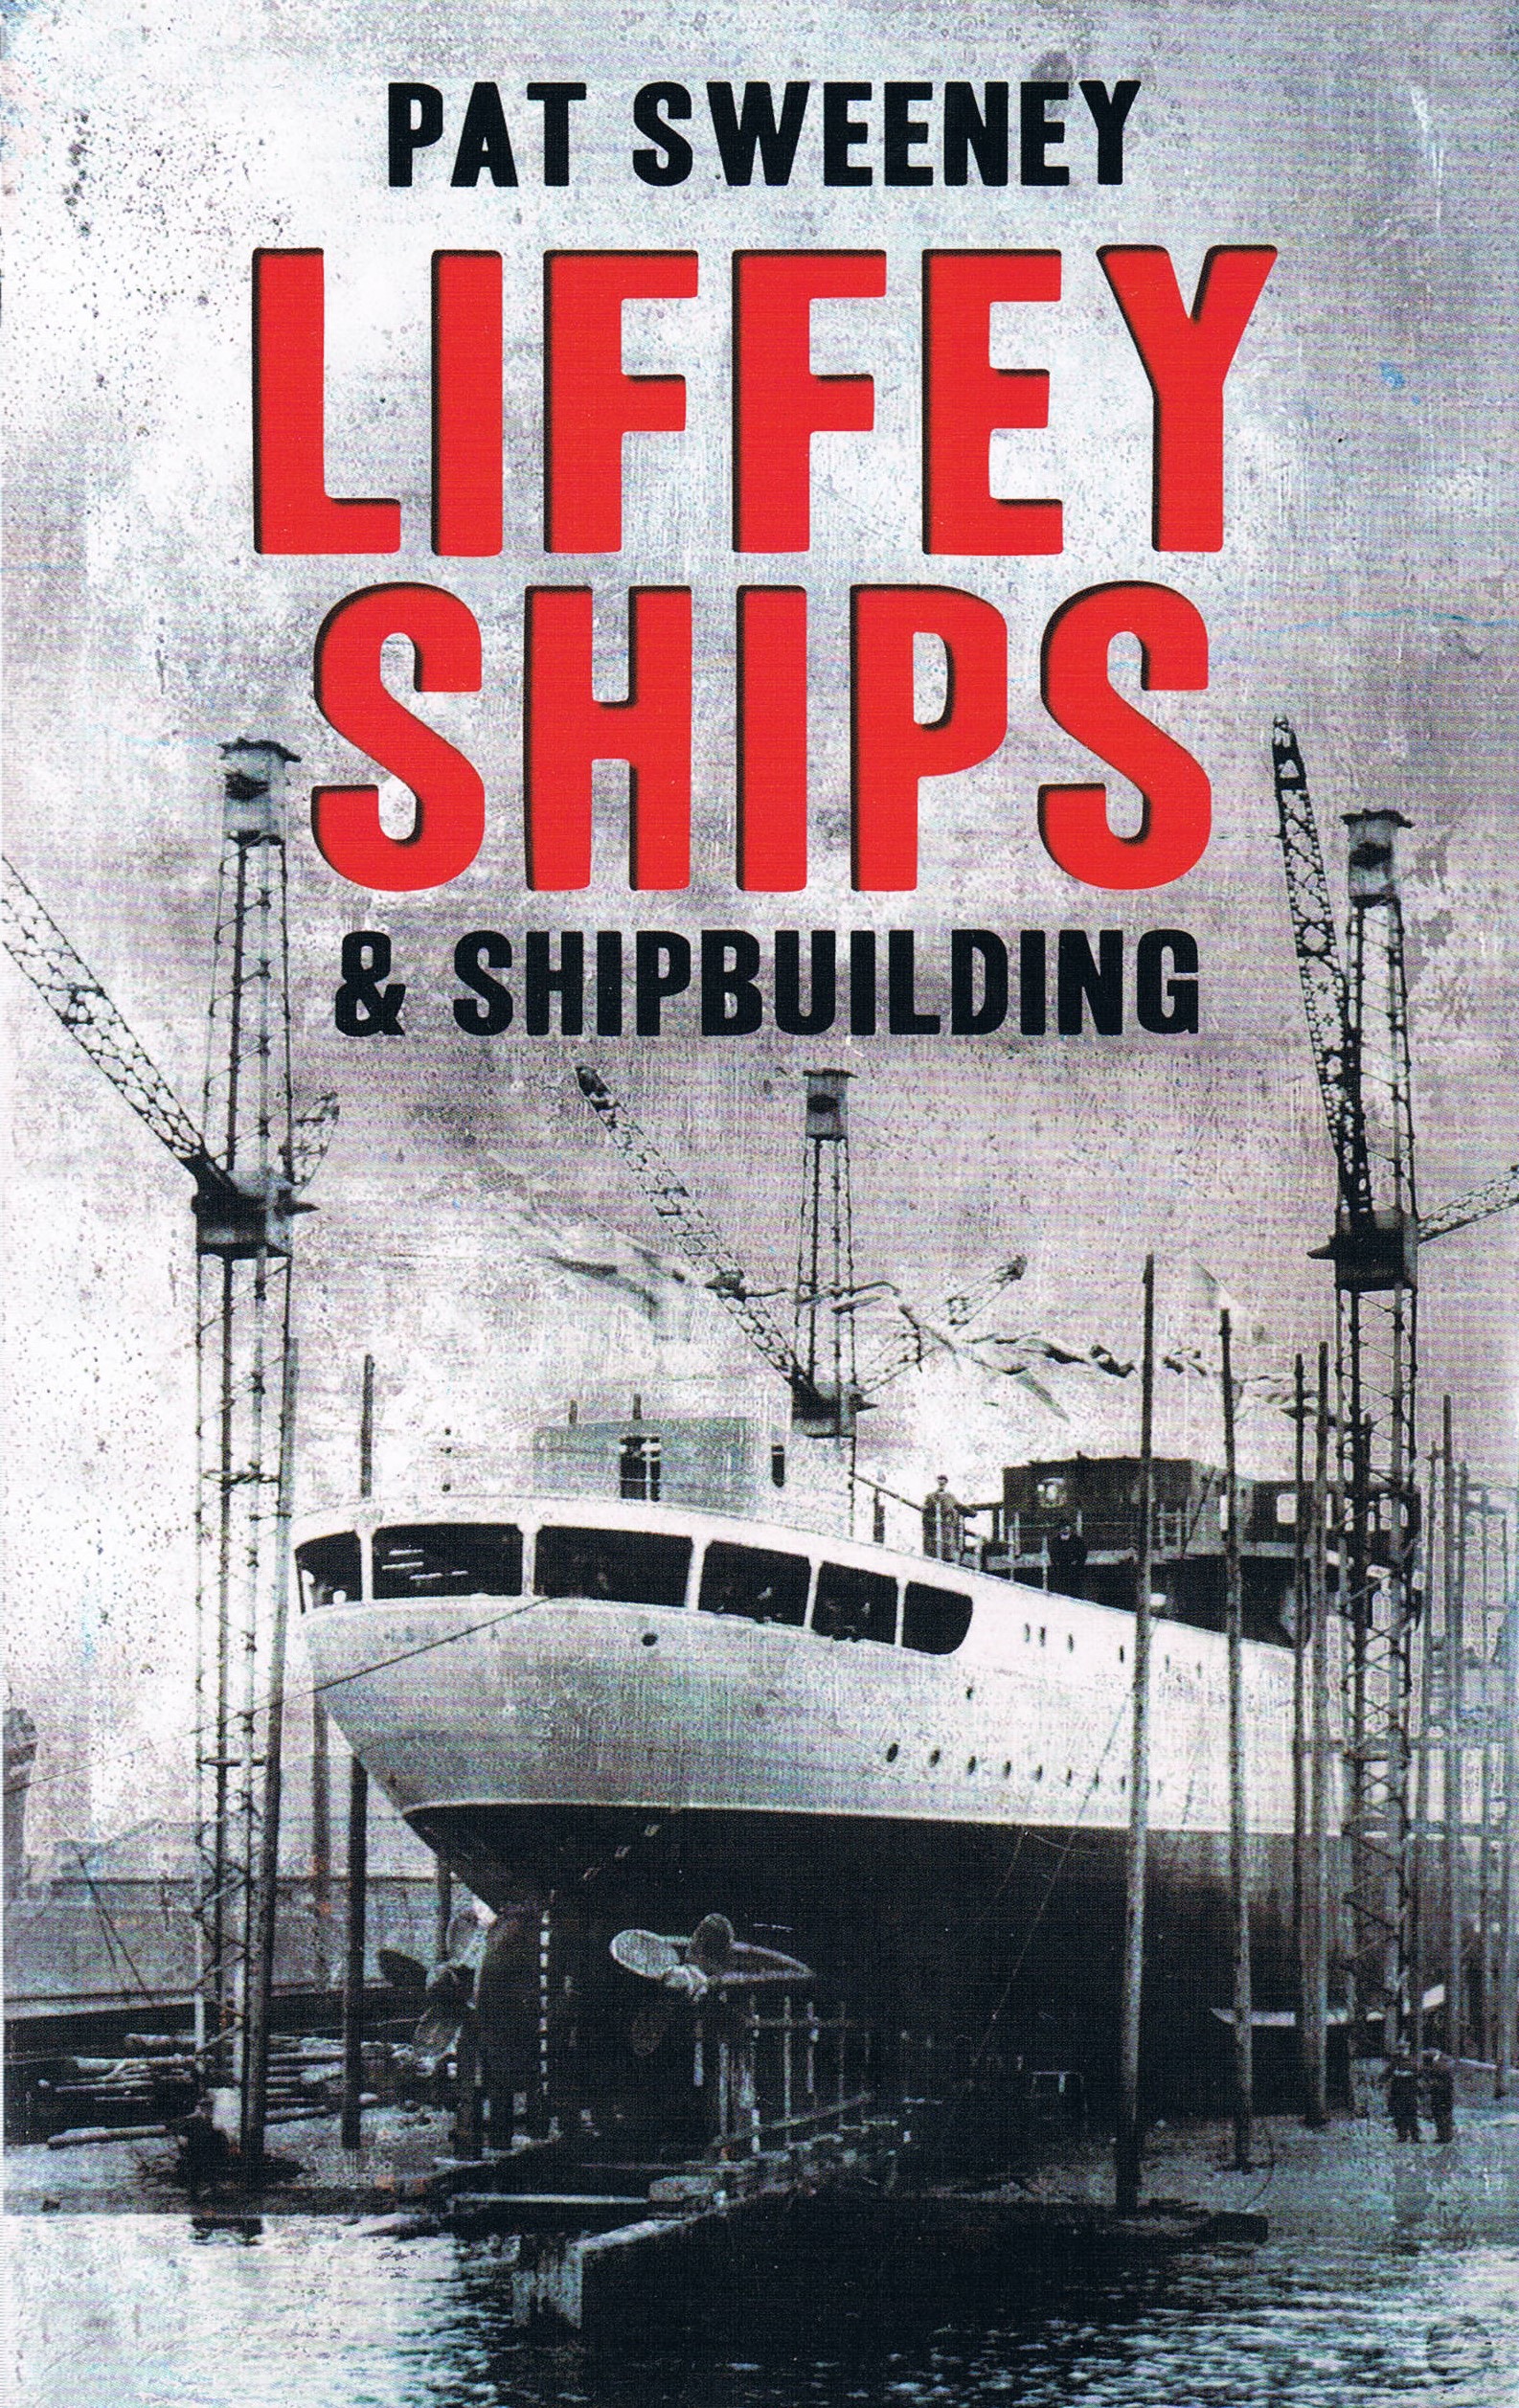 Liffey Ships & Shipbuilding | Pat Sweeney | Charlie Byrne's